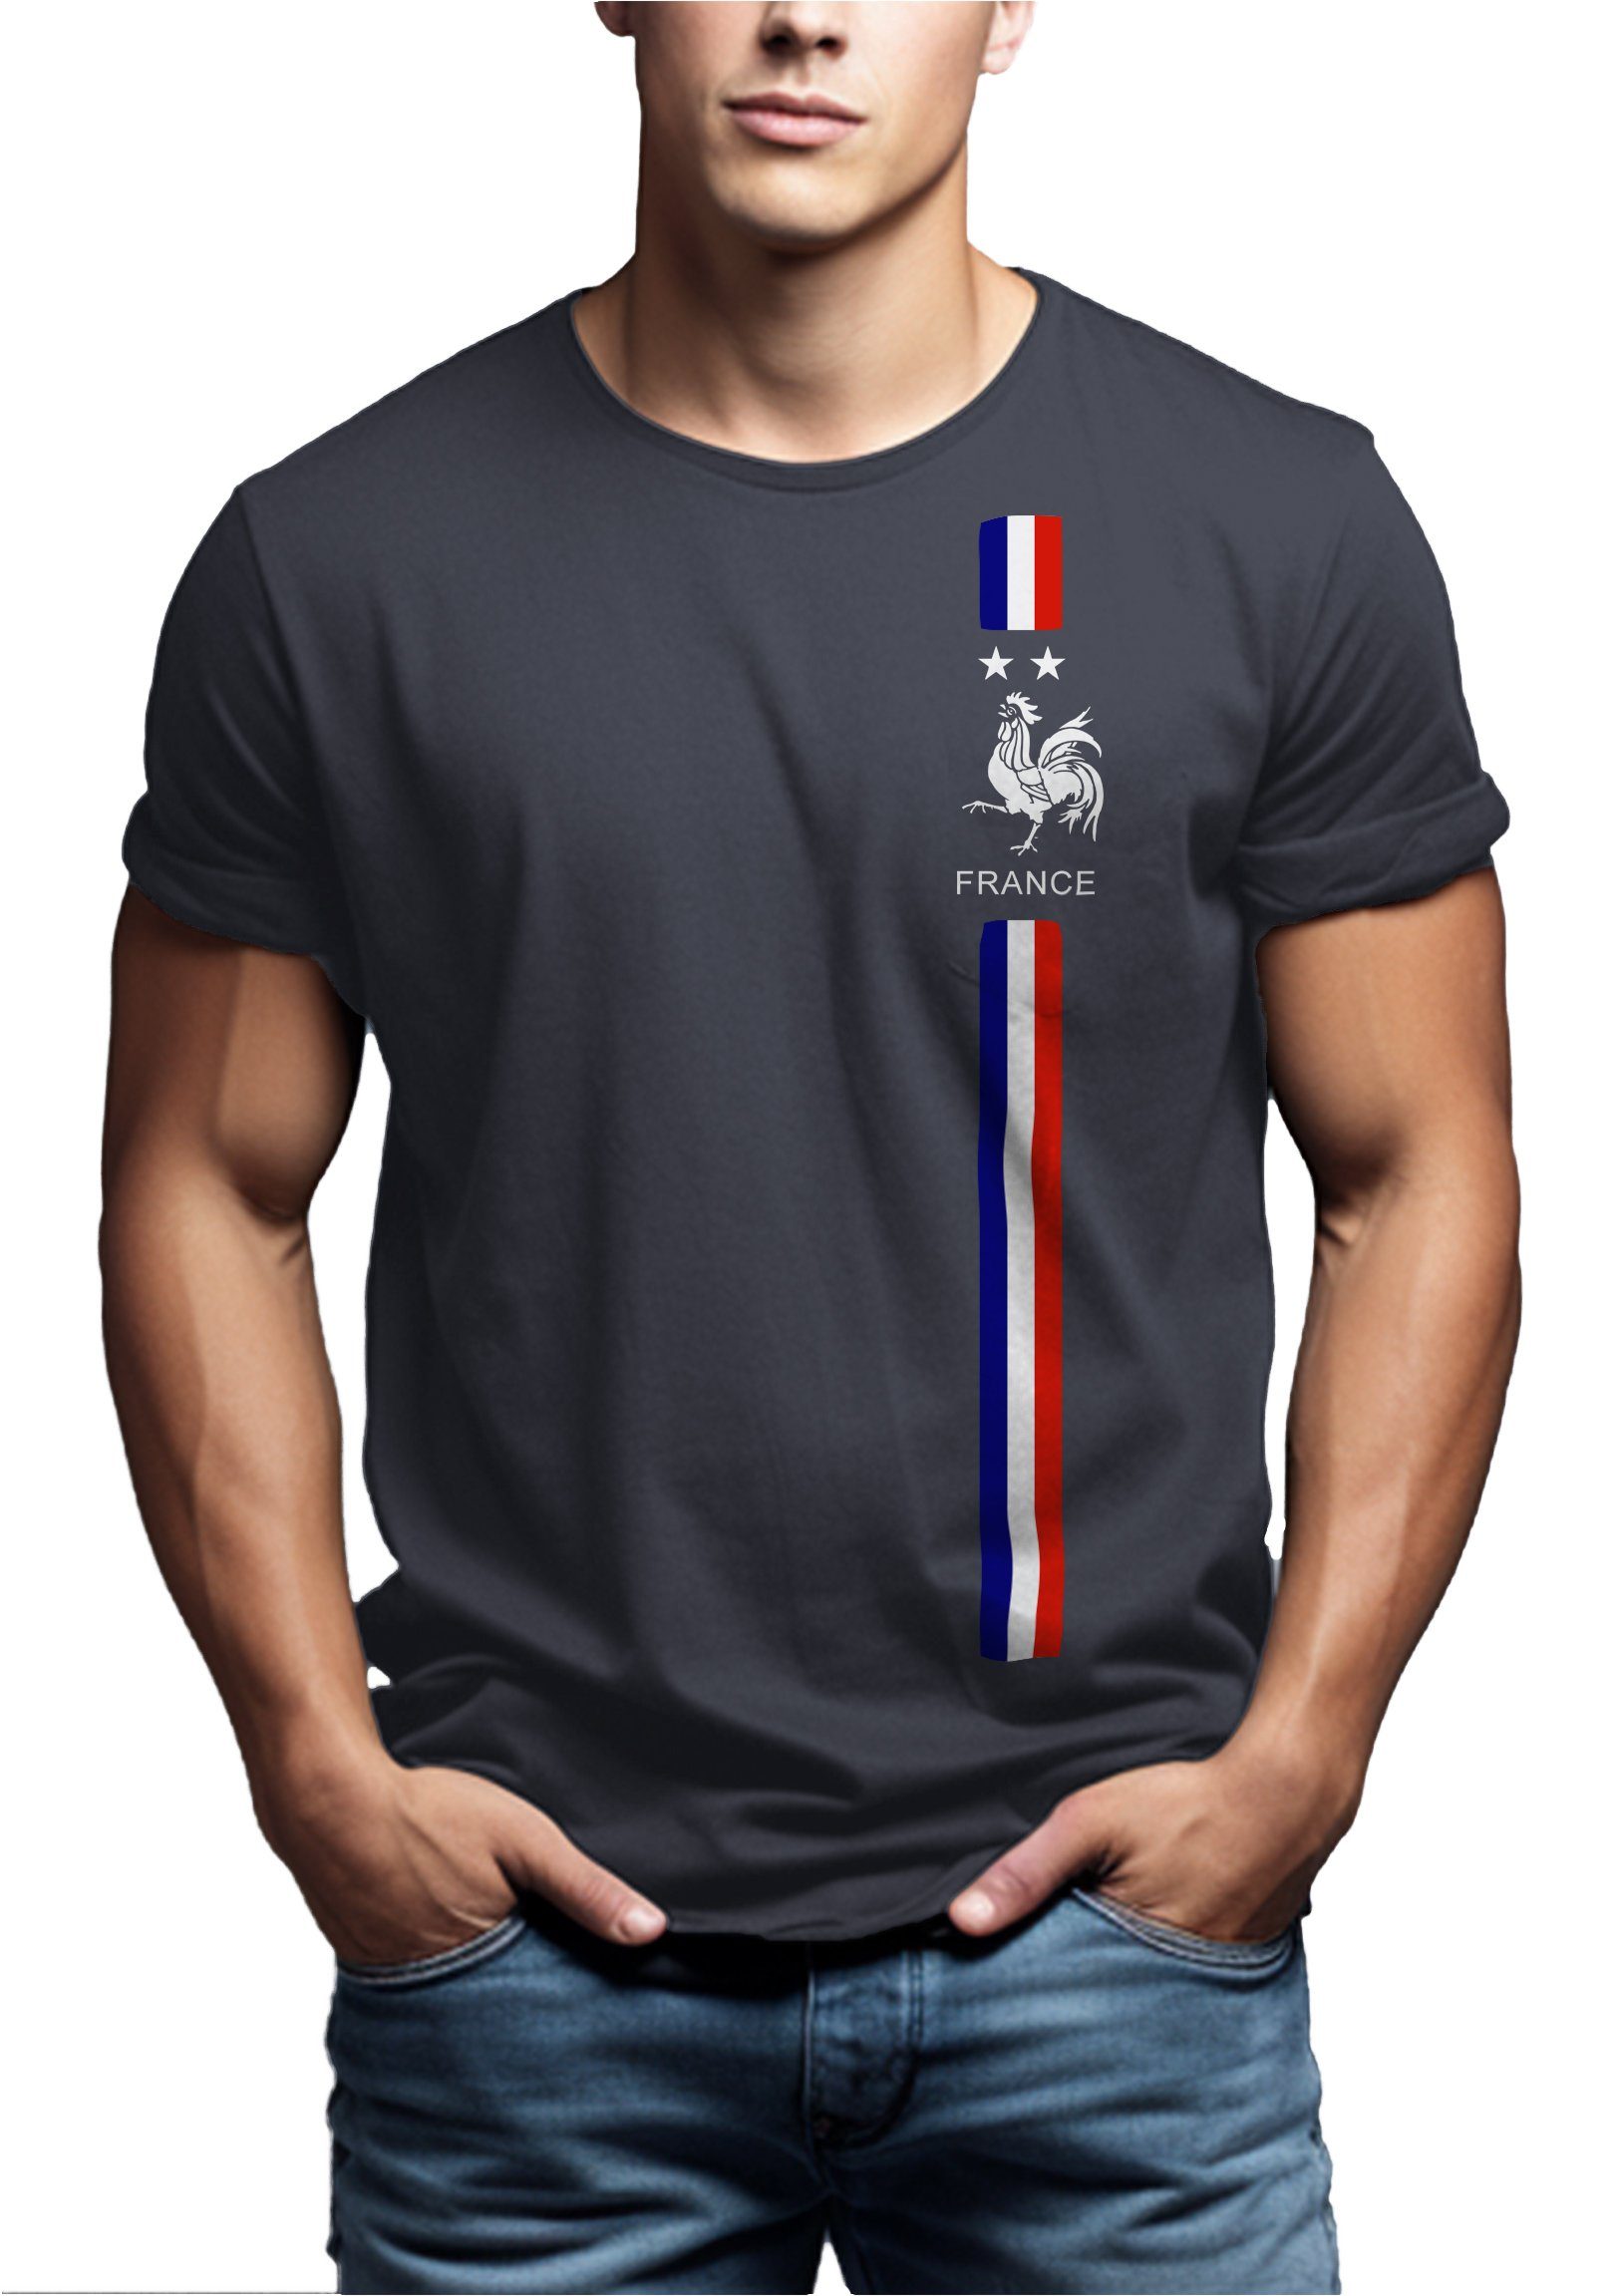 MAKAYA Blaugrau Trikot Männer Fahne Herren Print-Shirt Geschenke Fußball Flagge Frankreich